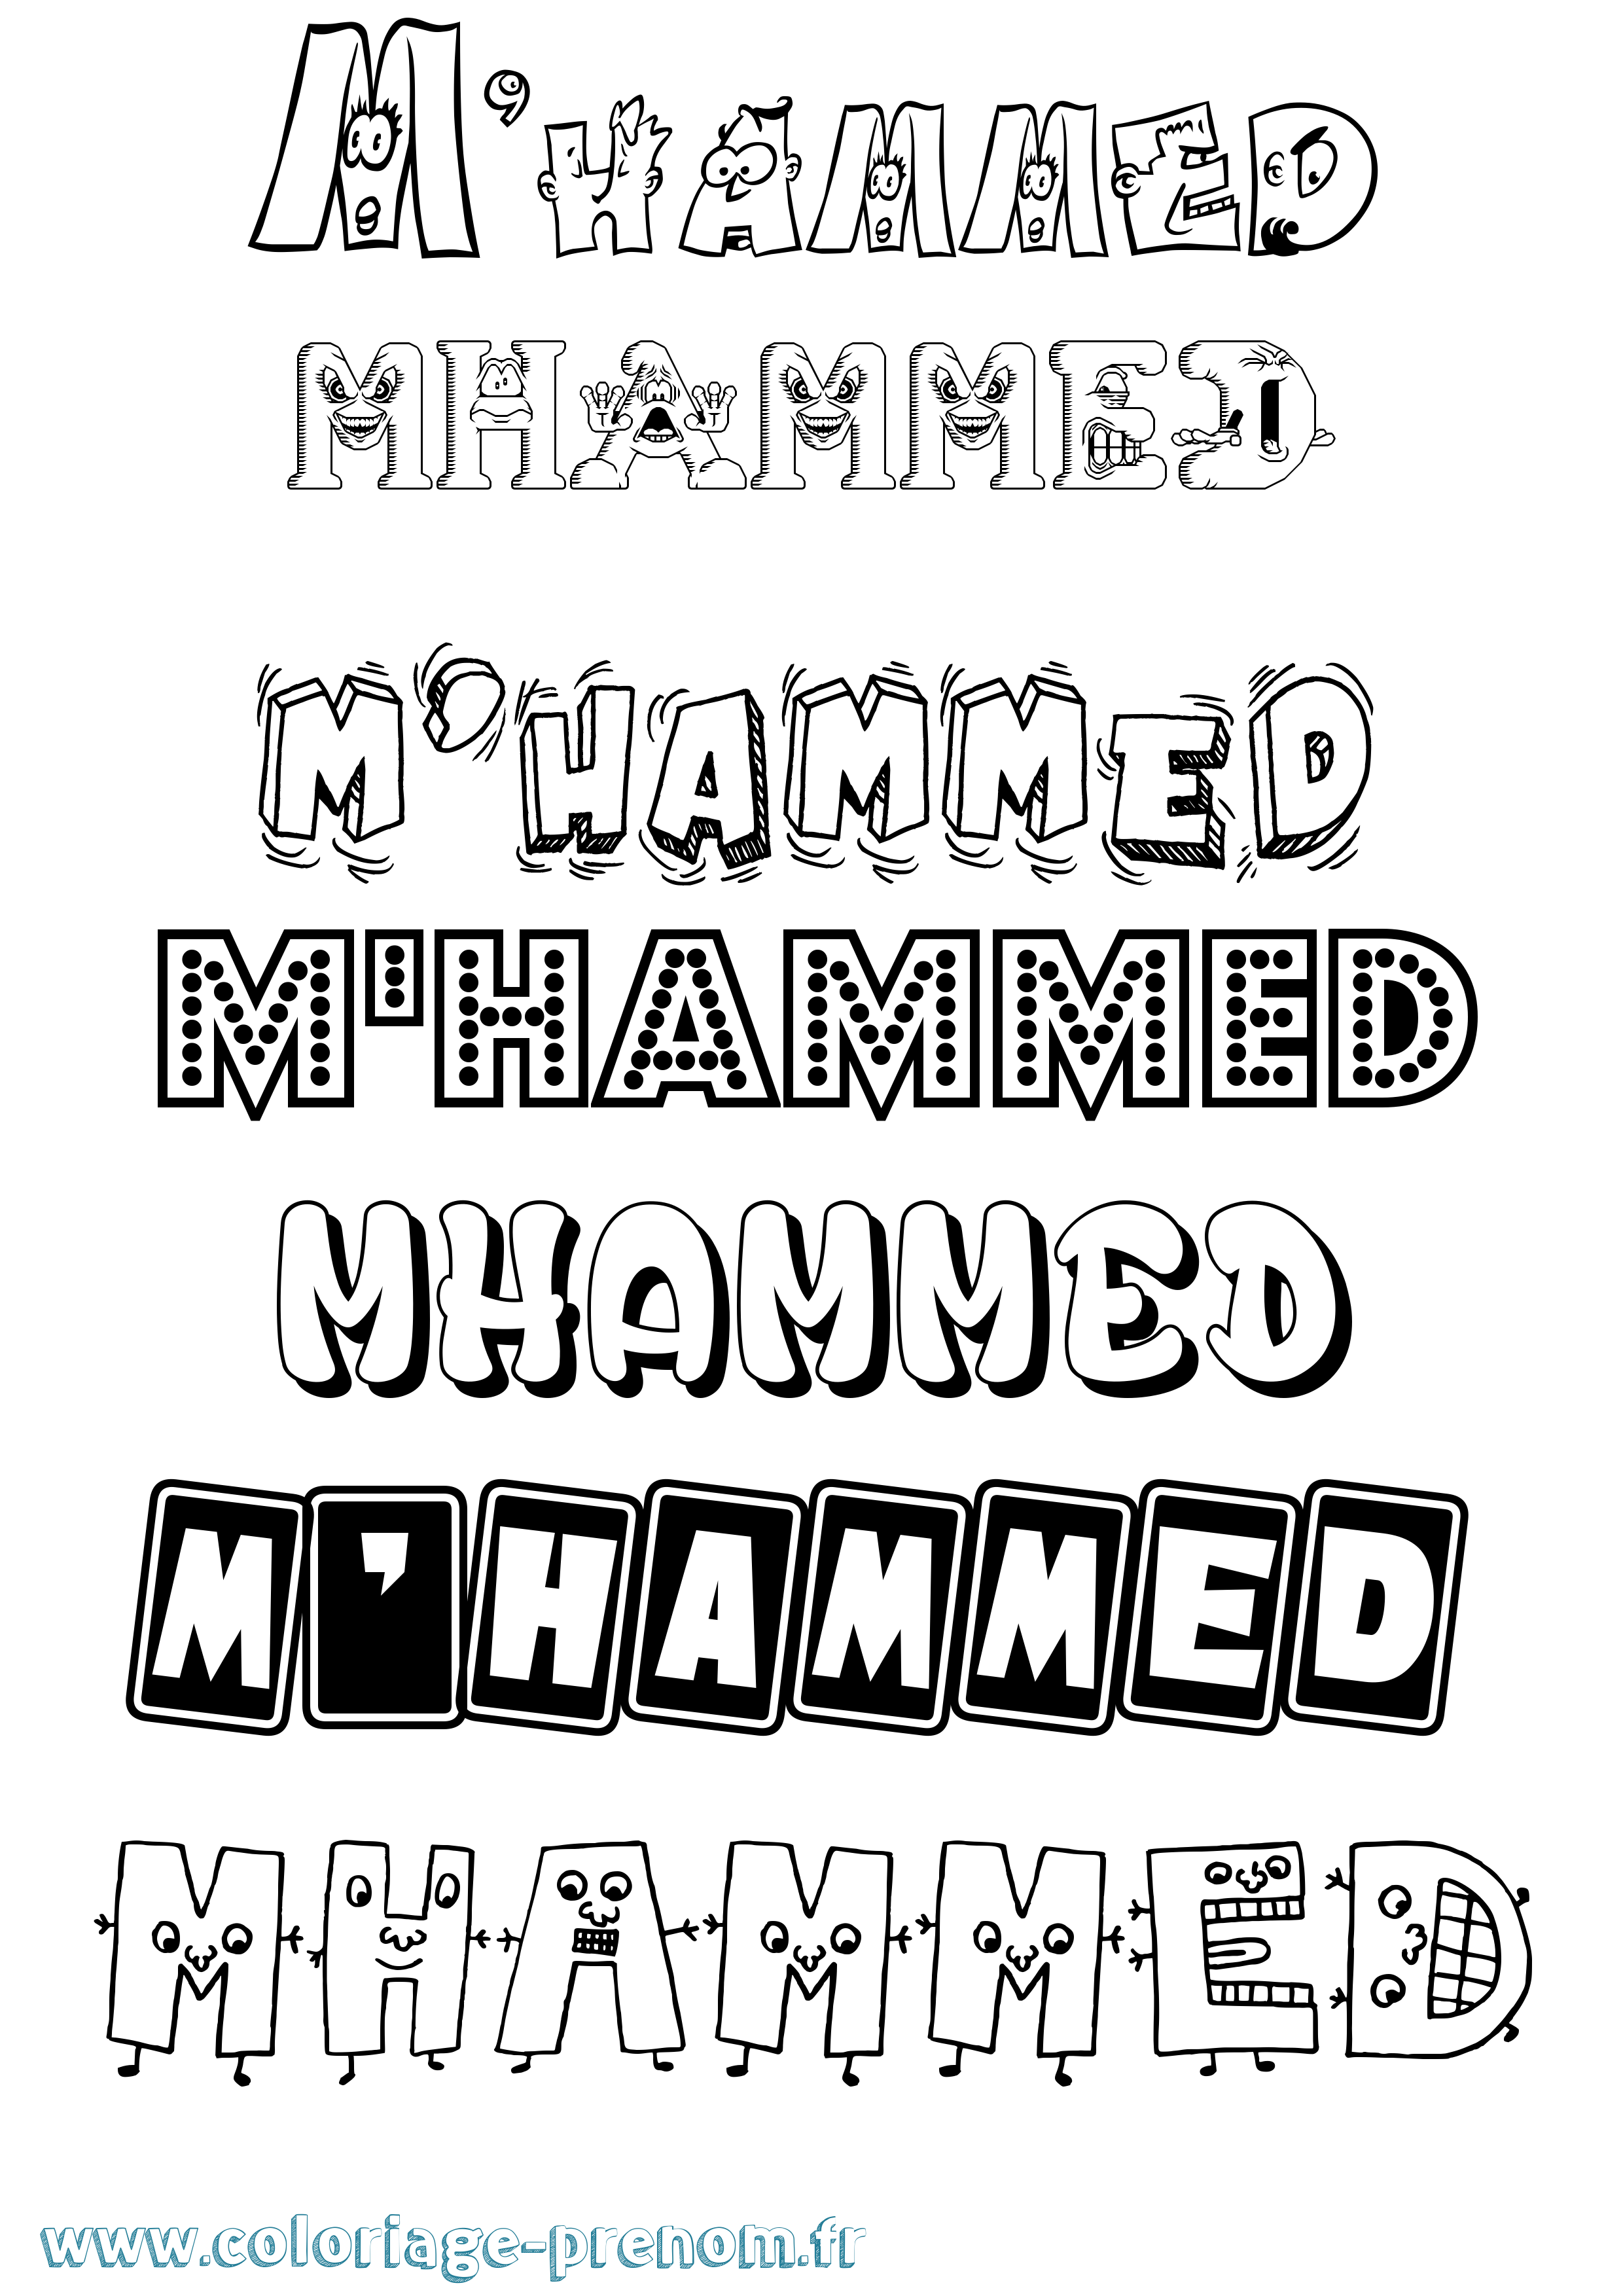 Coloriage prénom M'Hammed Fun